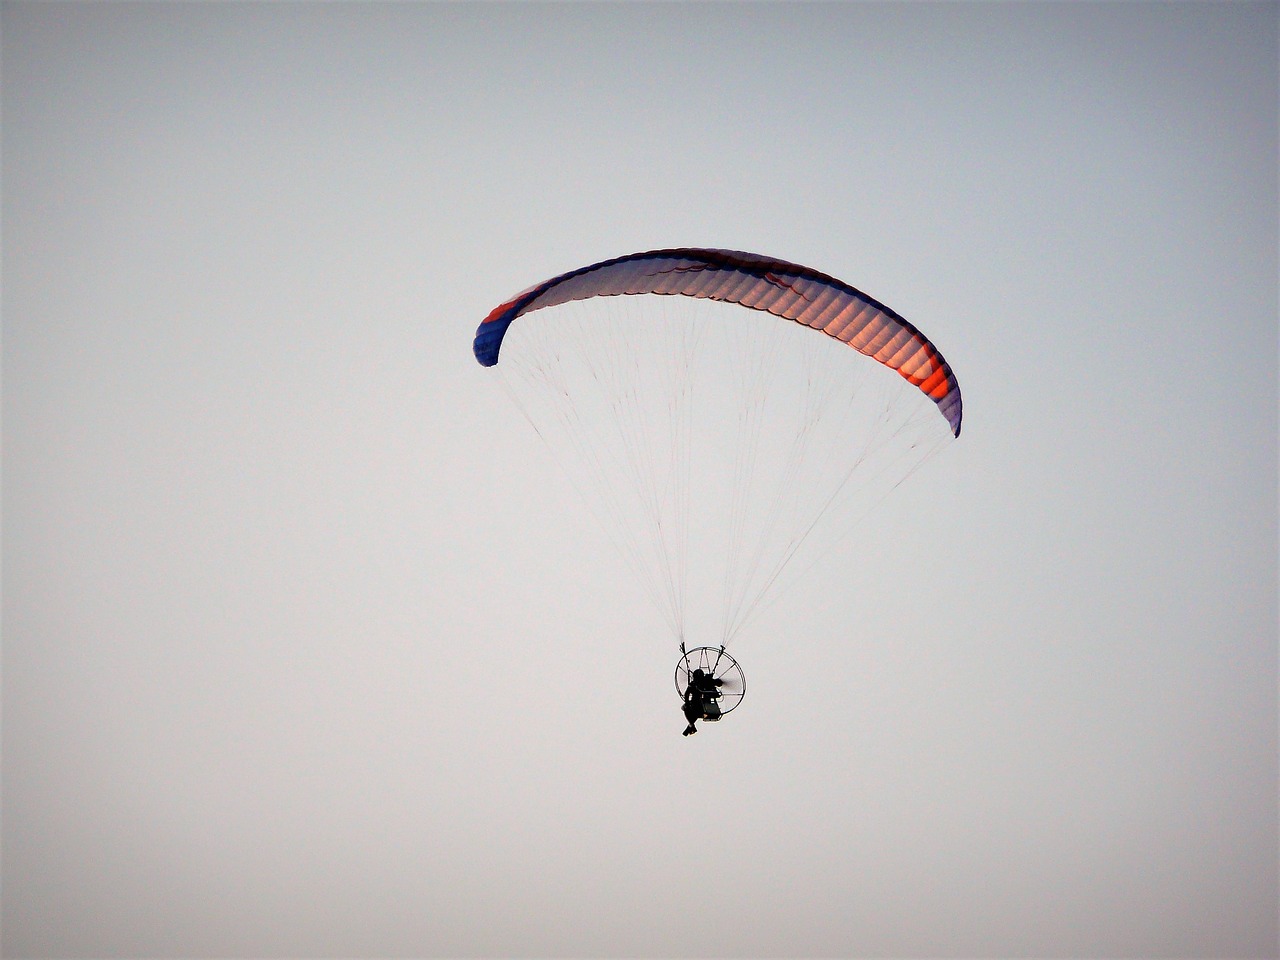 parachute flight sky free photo